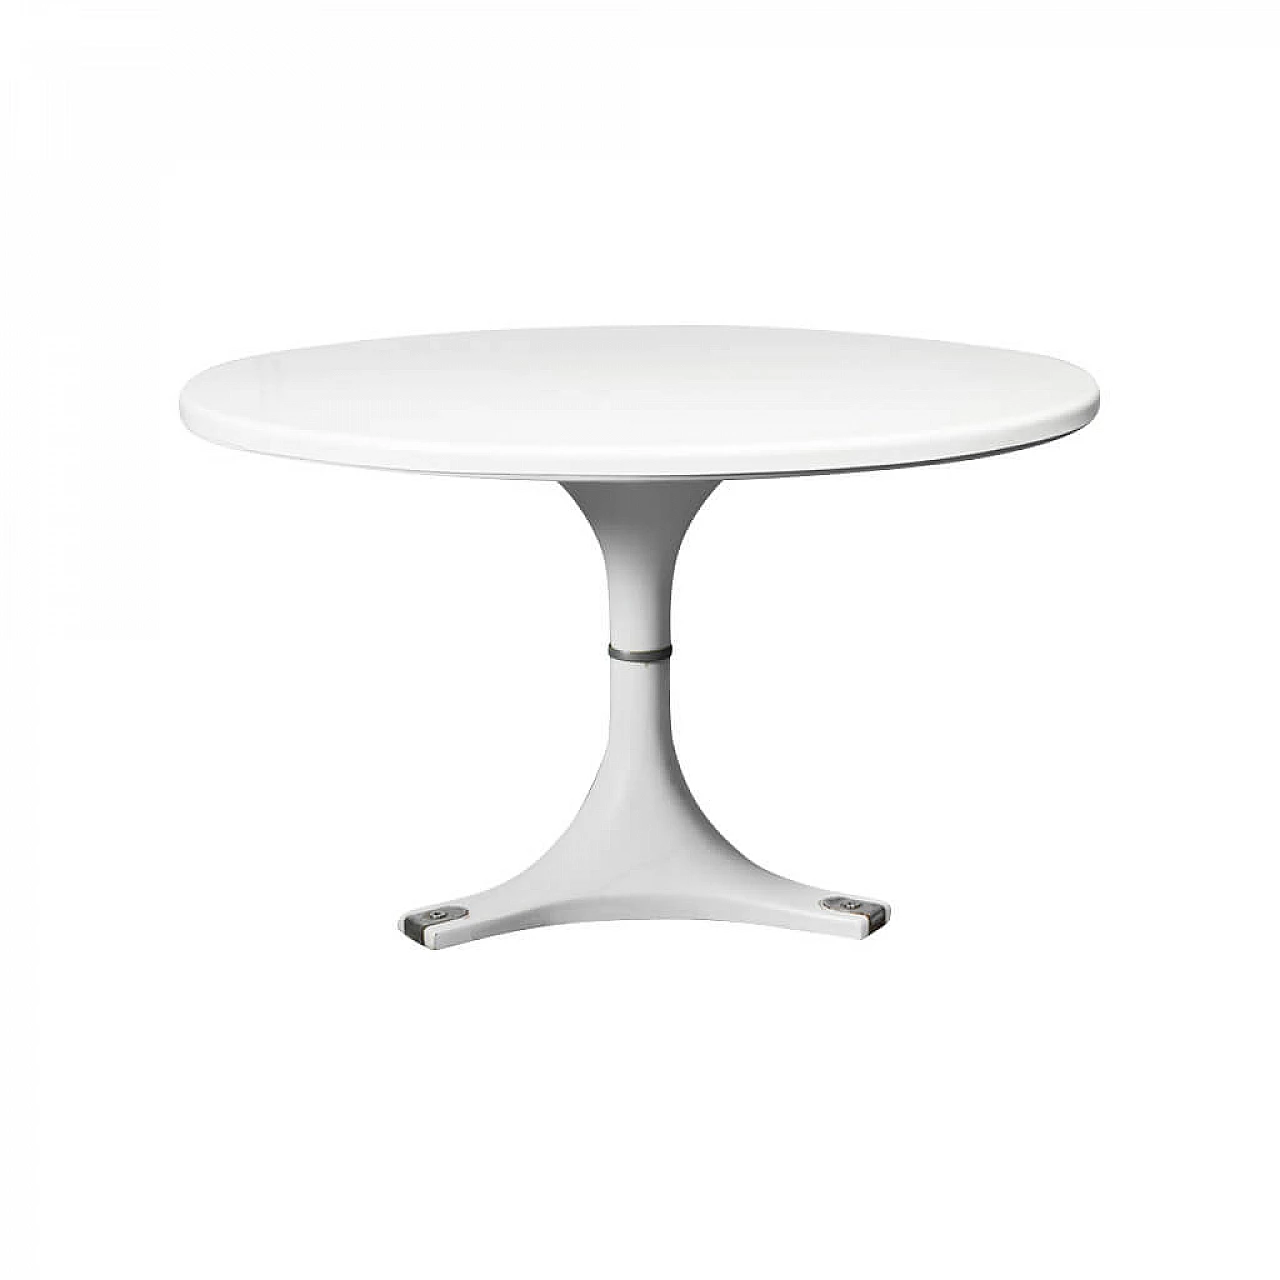 Round table 4997 by Anna Castelli and Ignazio Gardella for Kartell, 60s 1257642